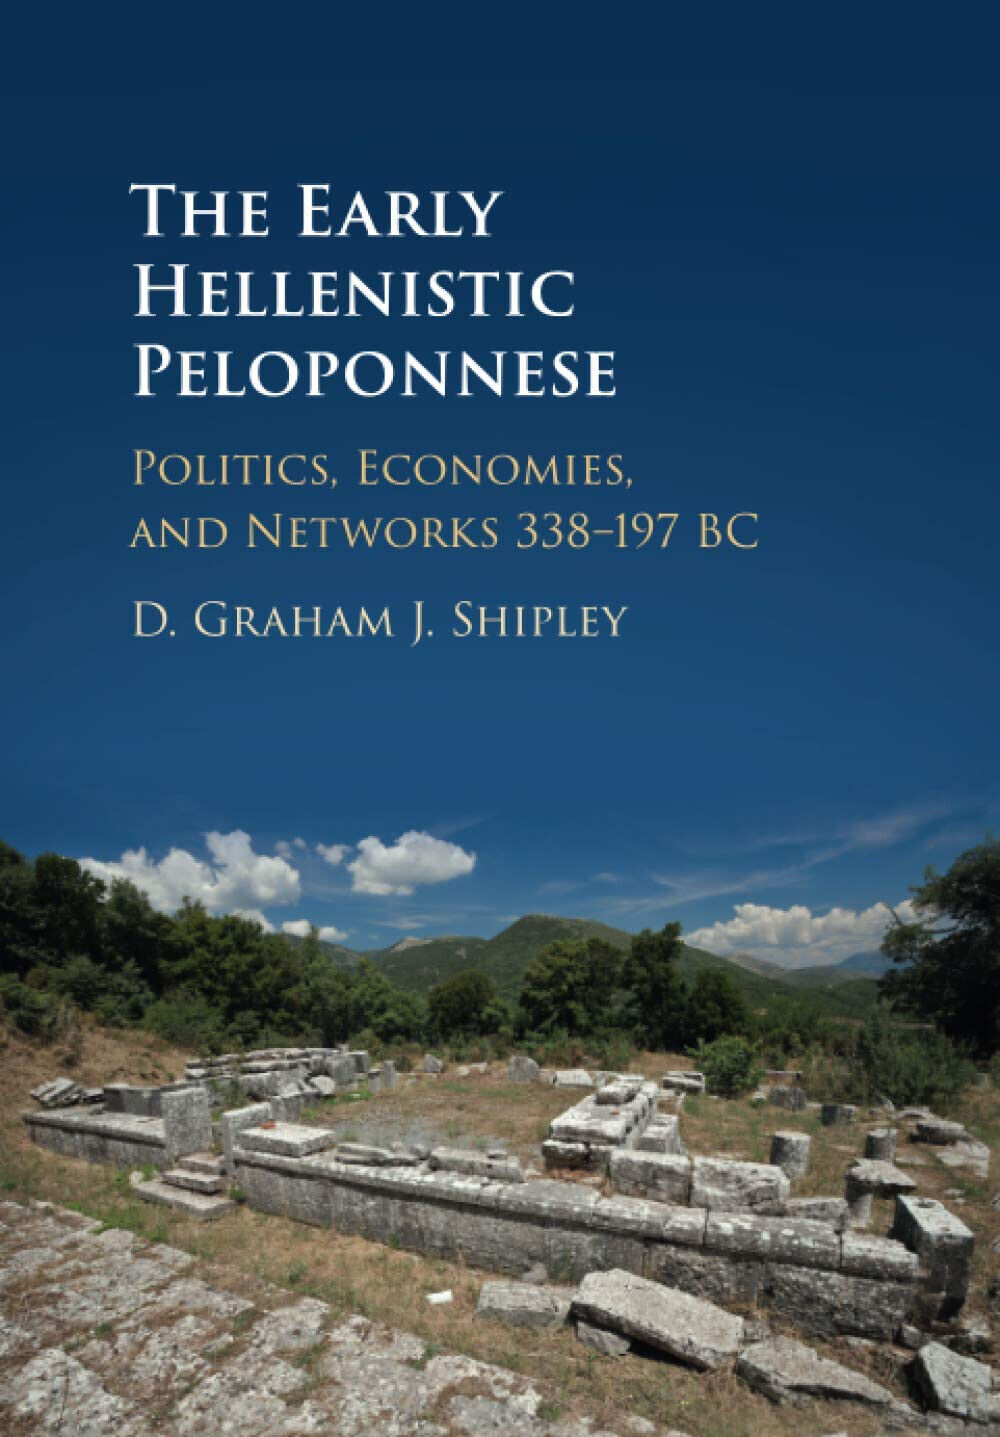 The Early Hellenistic Peloponnese - D. Graham J. Shipley - Cambridge, 2019